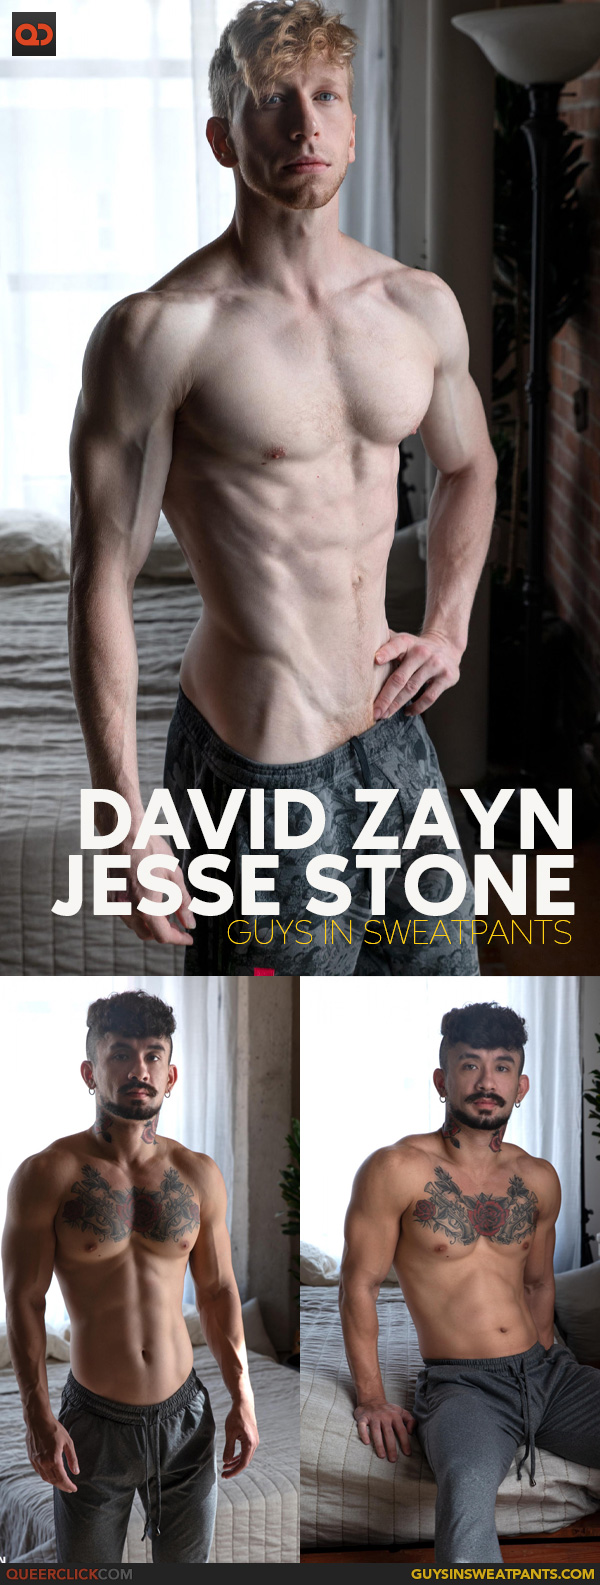 Guys in Sweatpants: David Zayn and Jesse Stone